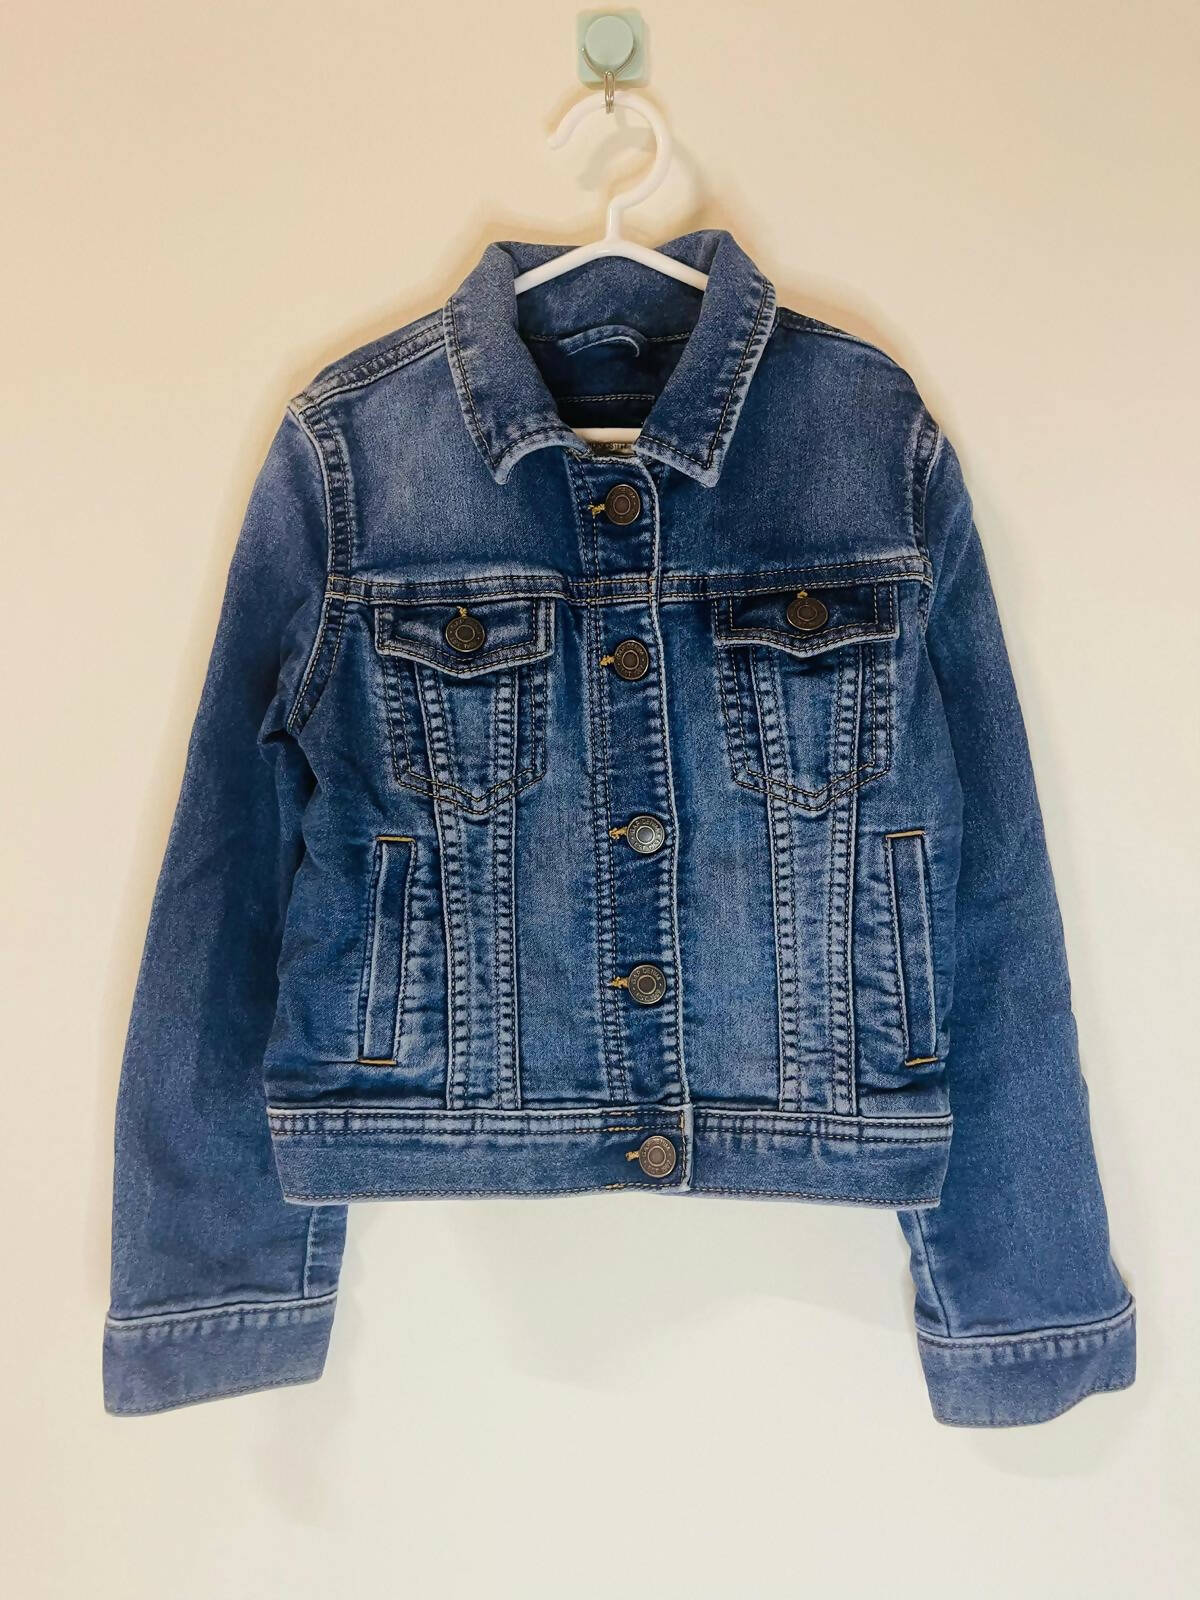 Gap kids | Blue denim jacket (size 6-8) | Girls Tops & Shirts | Brand New